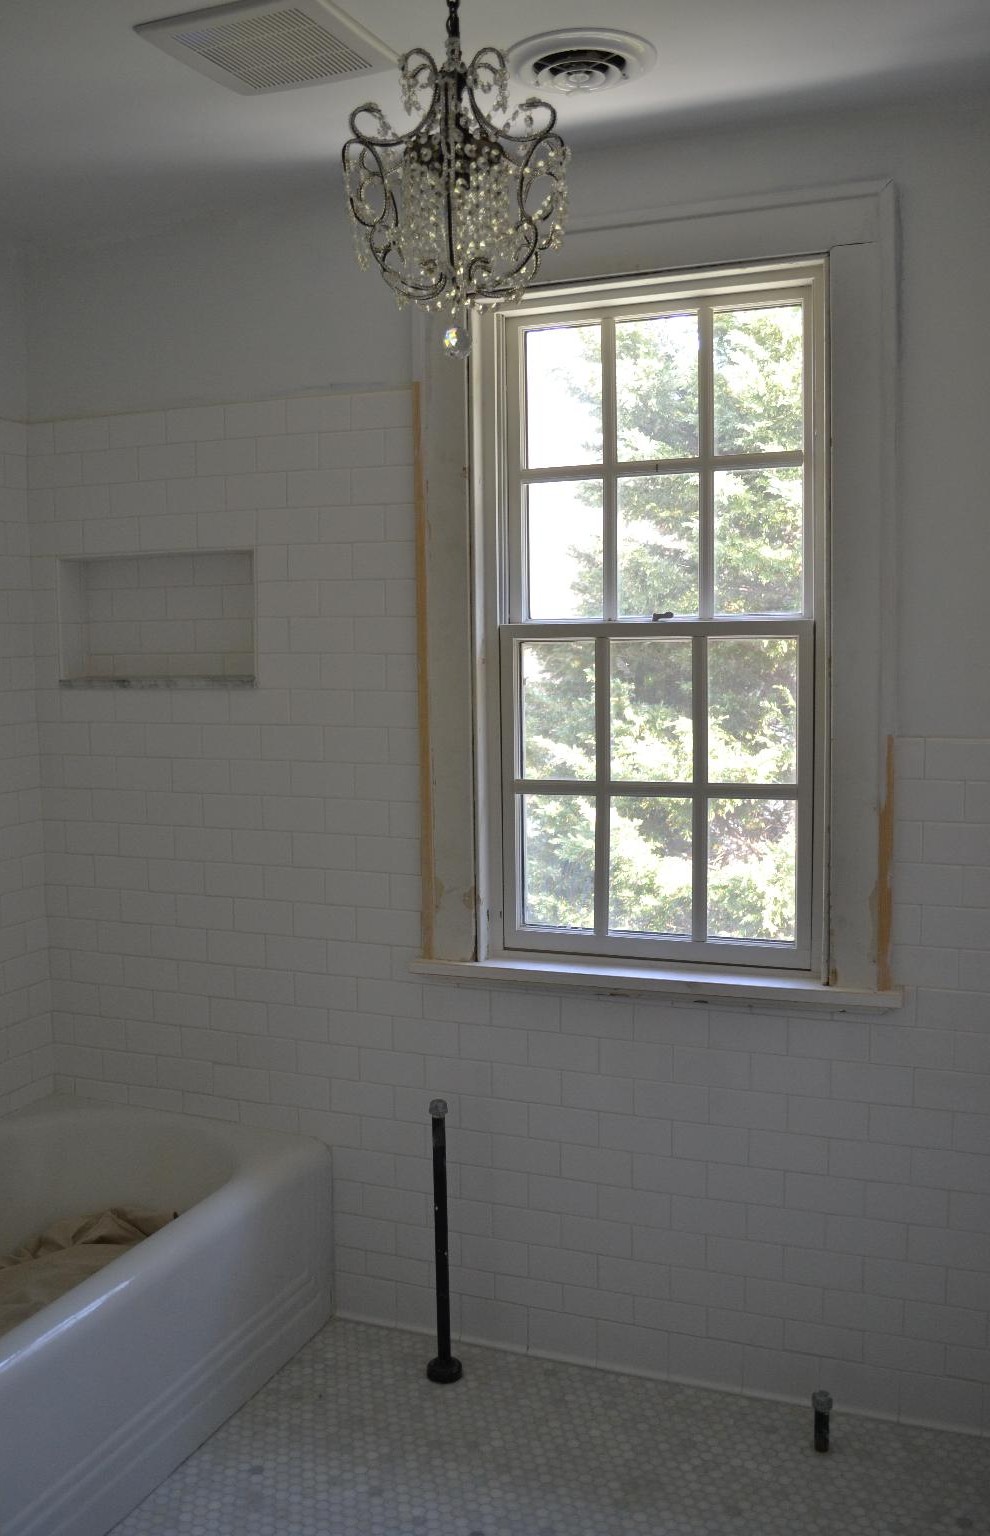 Cottage Fix - bathroom remodel in progress